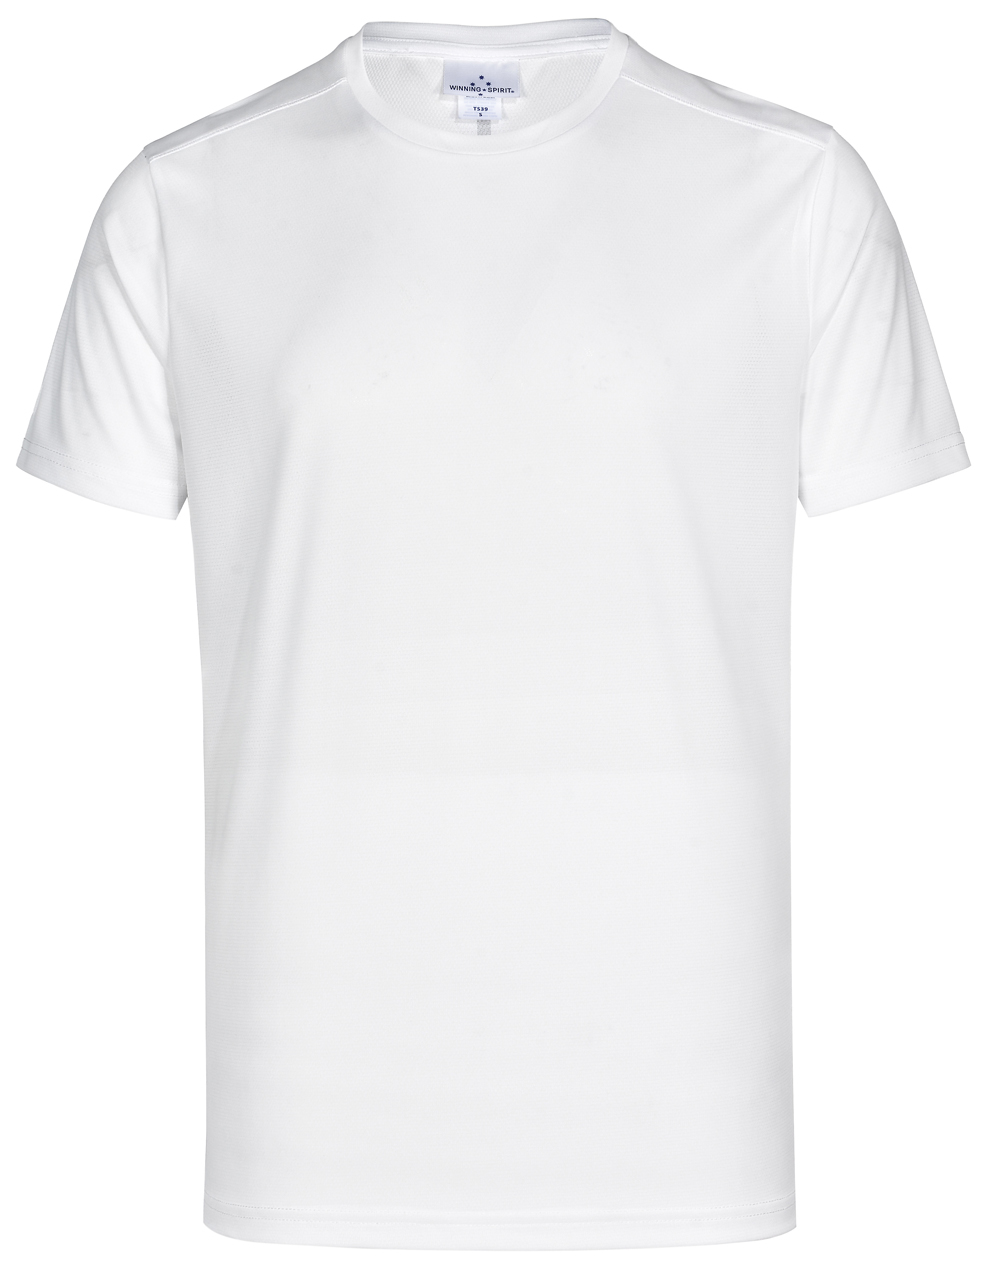 Uniform Australia-Winning Spirit-TS39-Rapidcool Ultra Light Tee Shirt ...